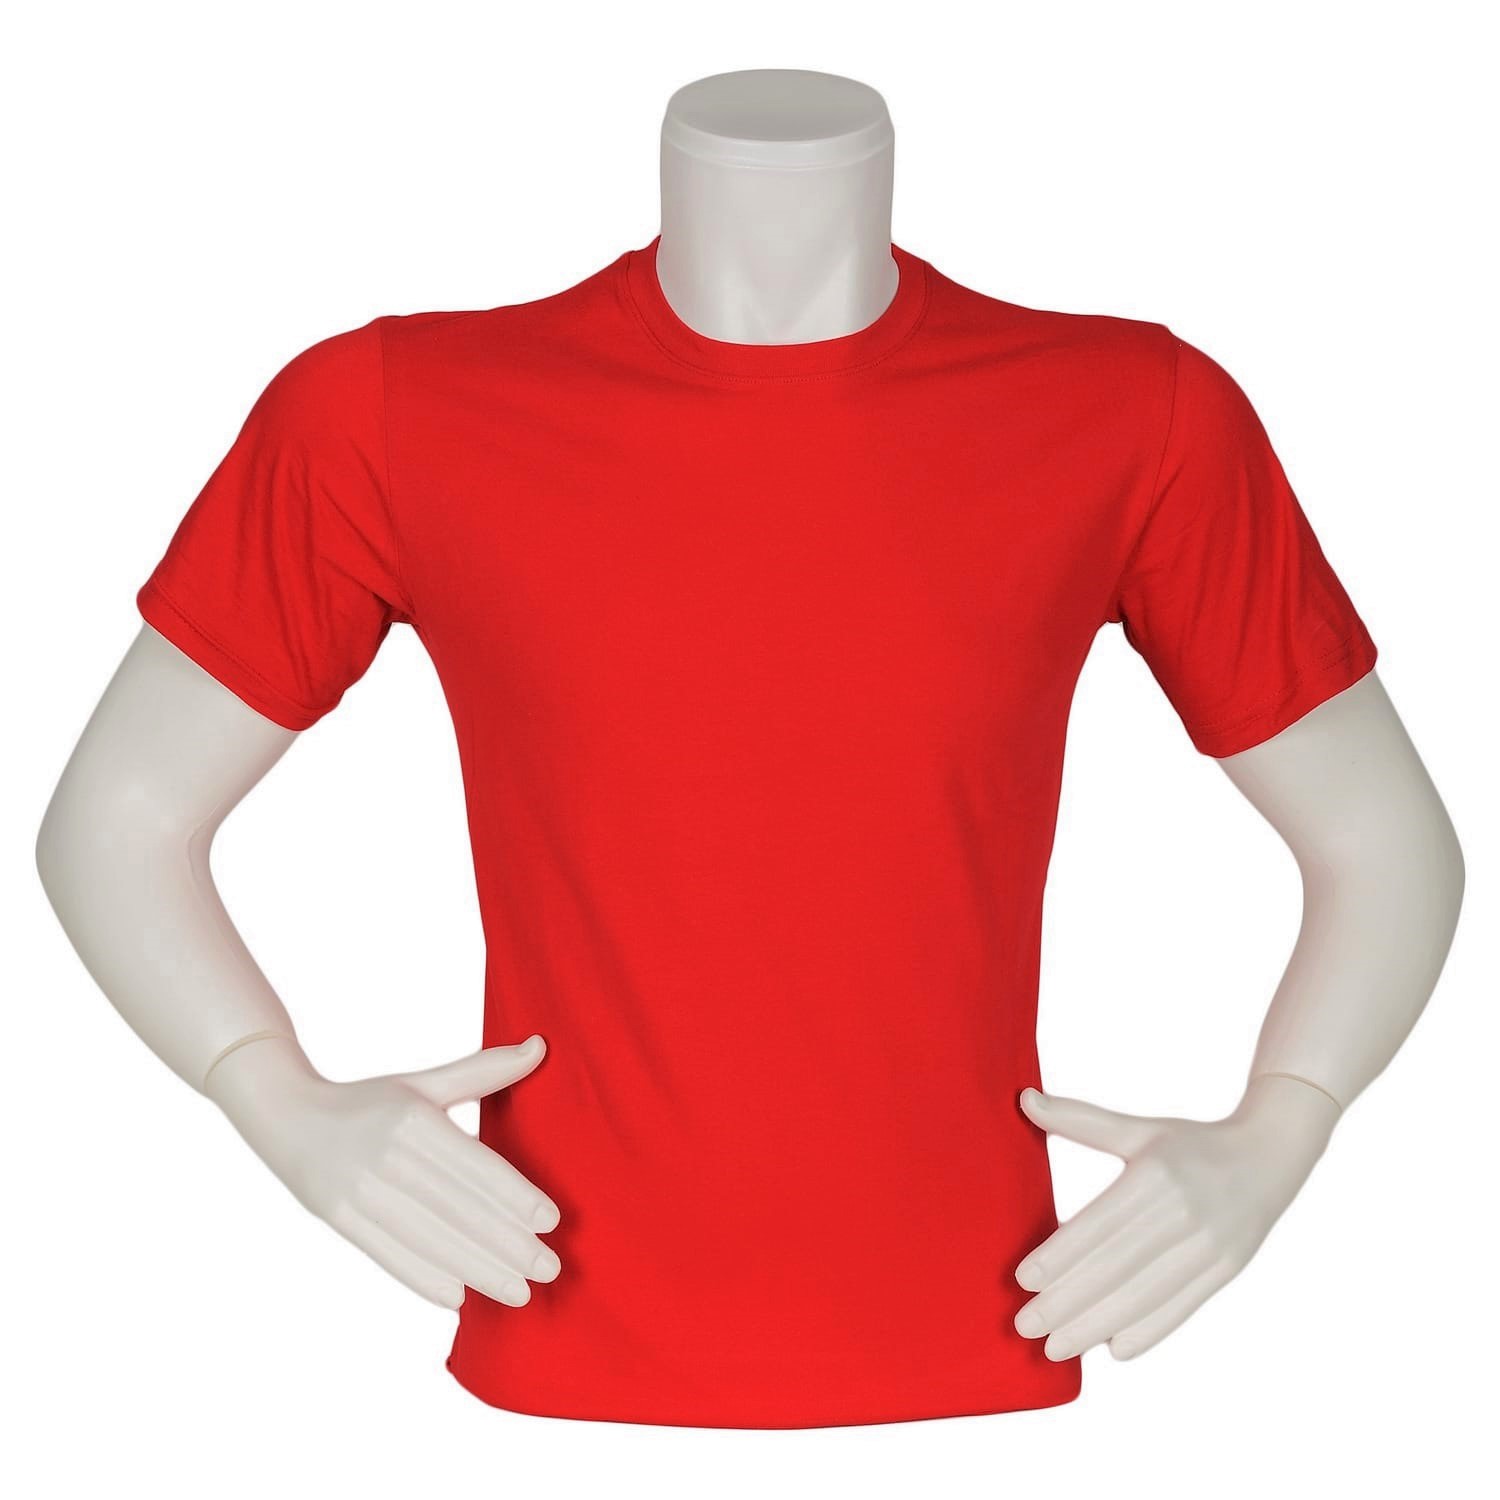 T-shirt Bisiklet Yaka Kırmızı Renk